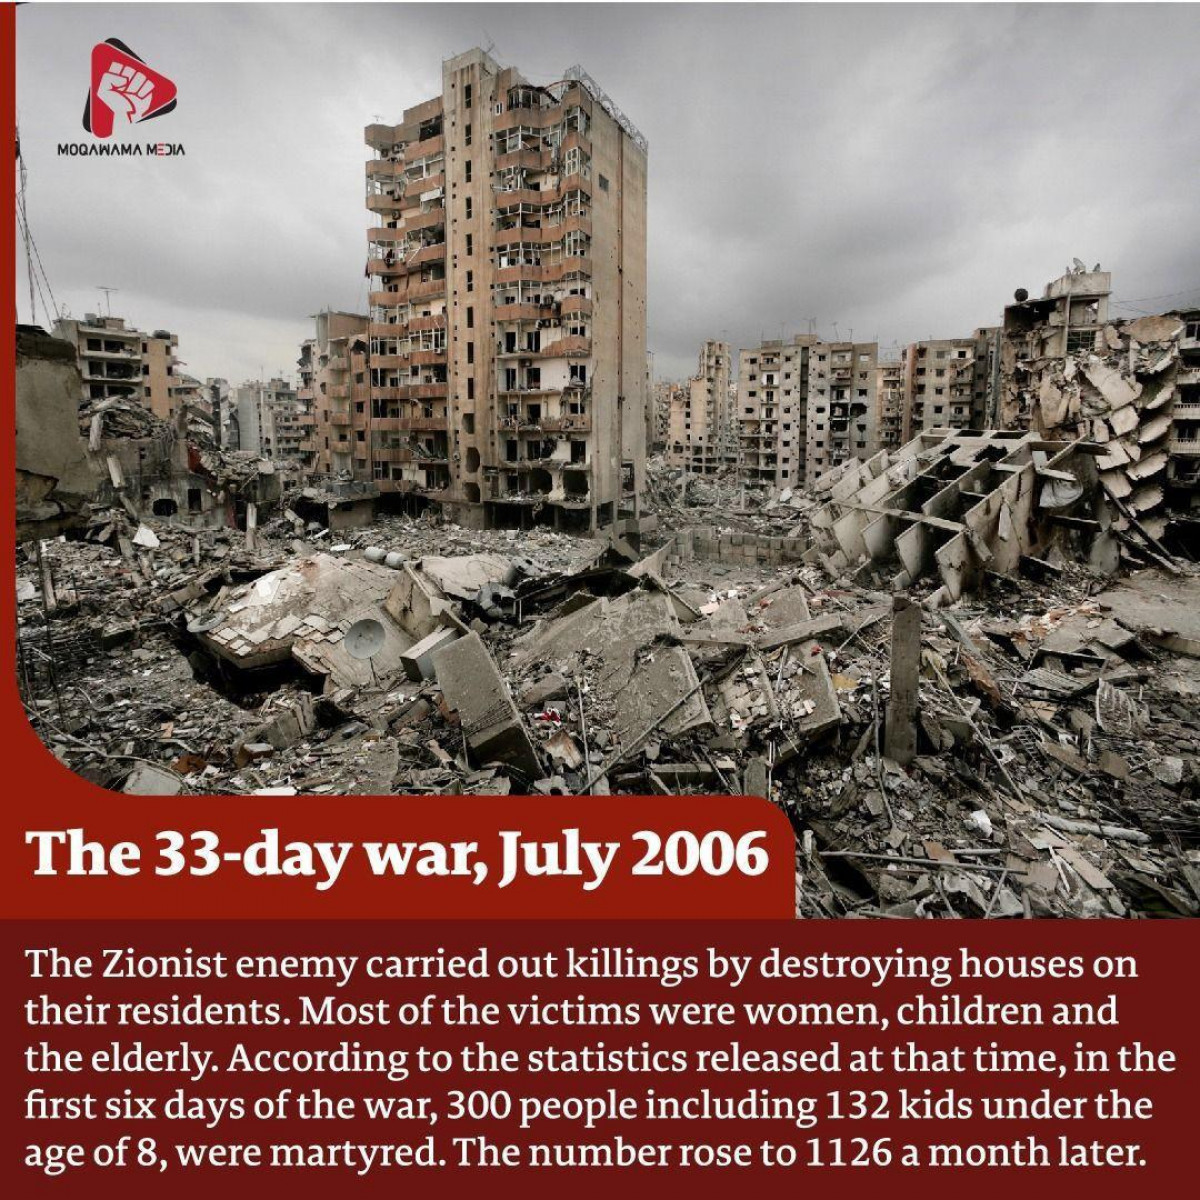 he 33-day war, July 2006